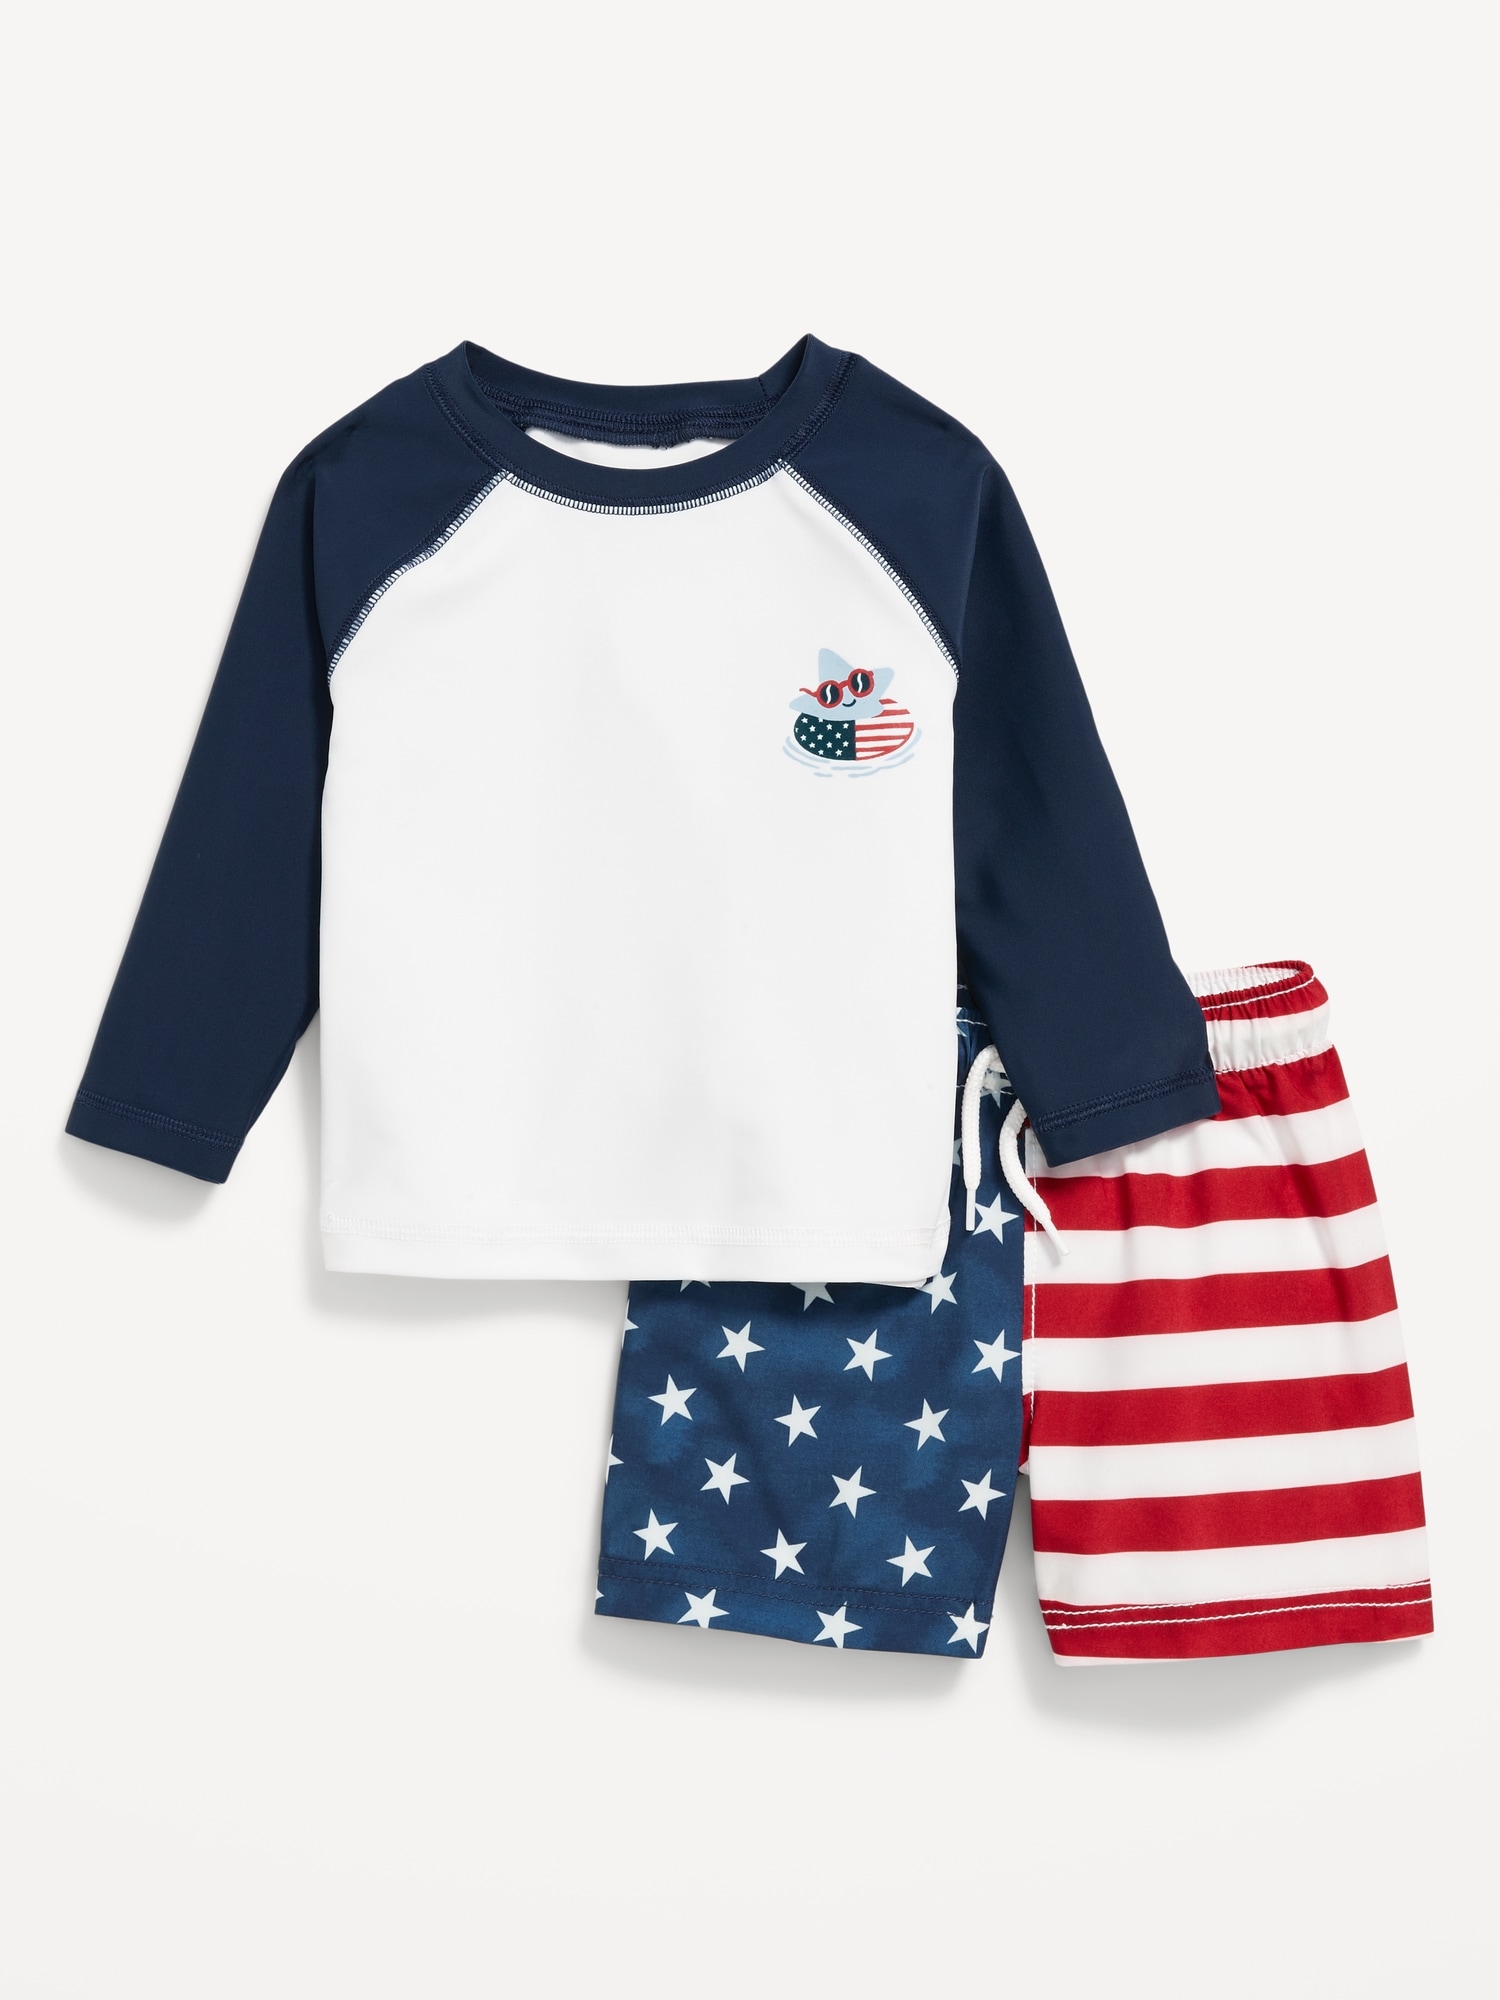 Americana Rashguard Graphic Swim Top and Trunks for Baby